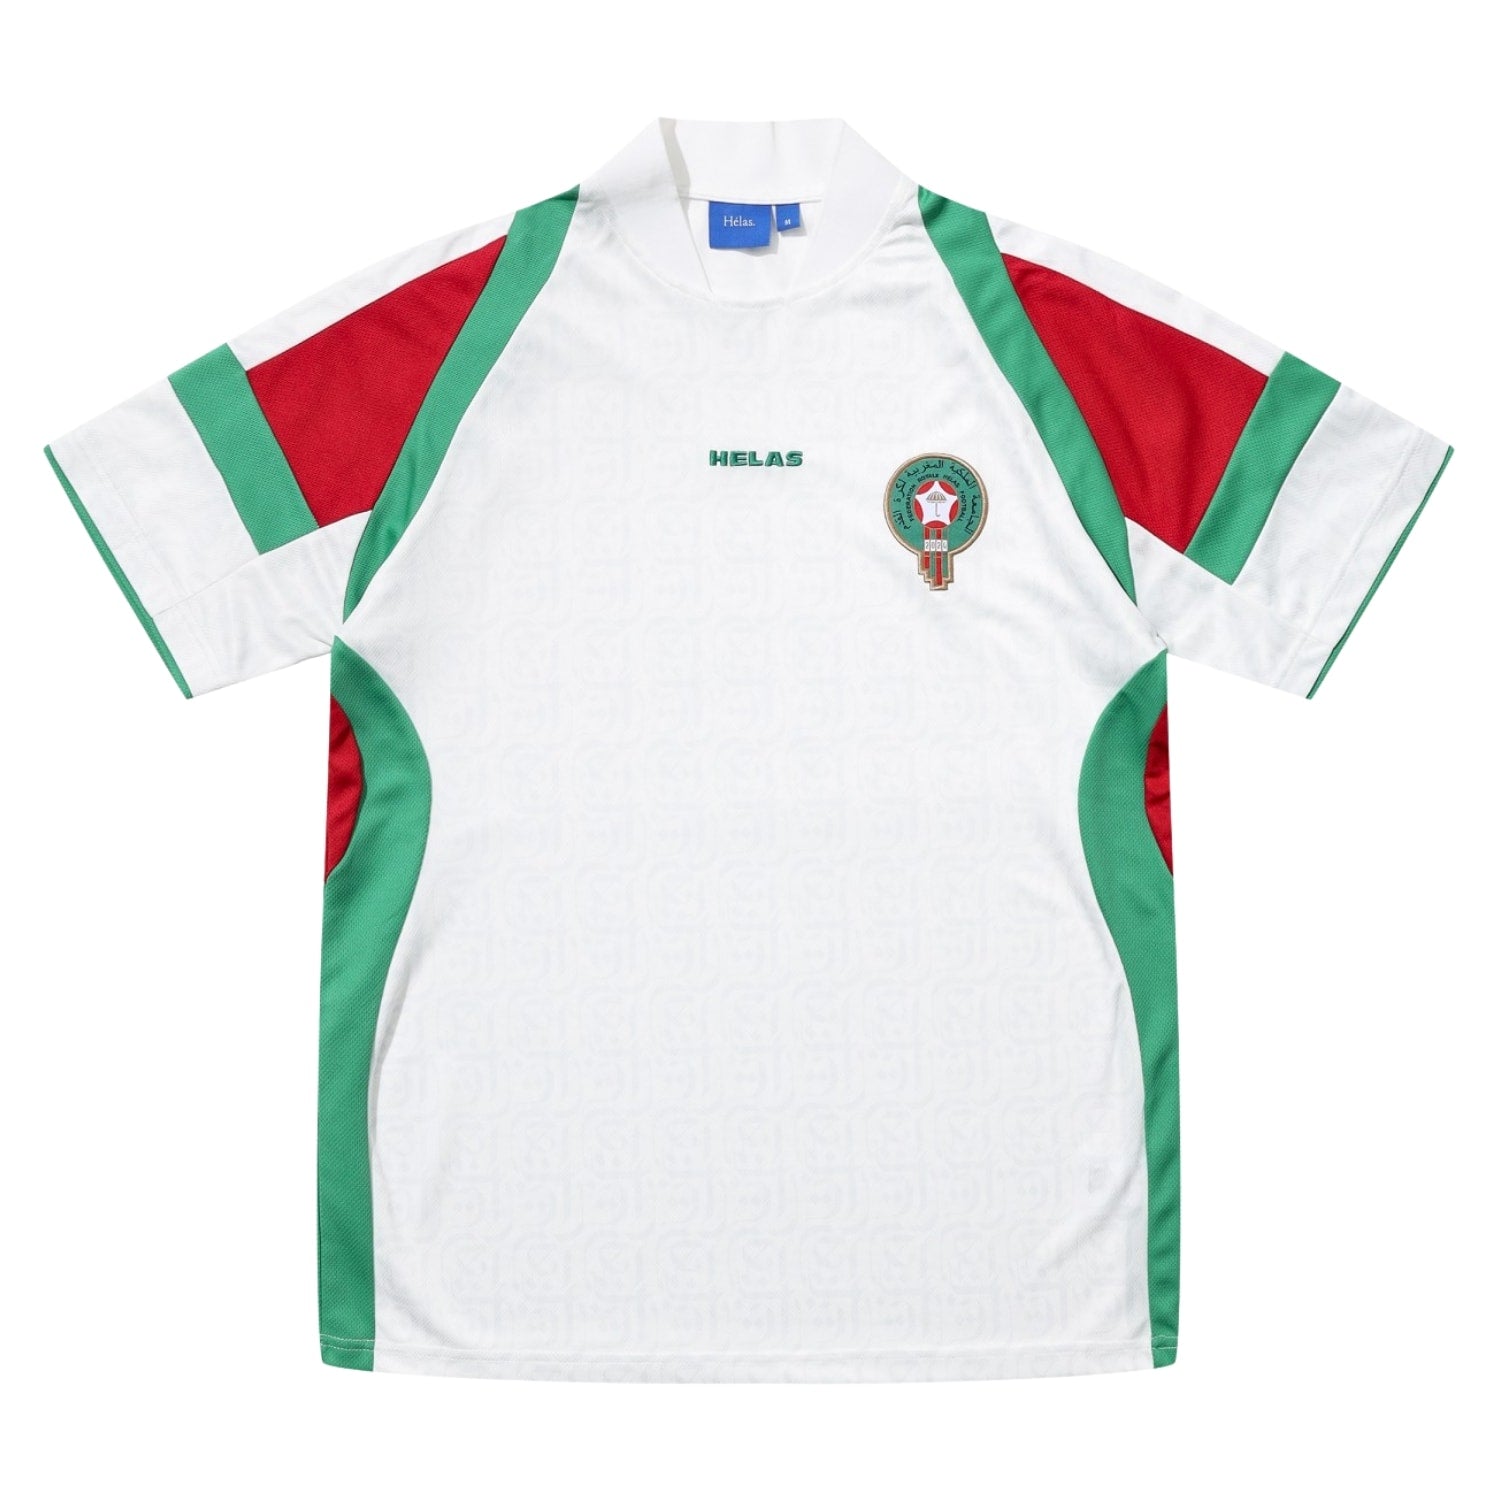 Helas Morocco Top - White - Mens Graphic T-Shirt by Helas